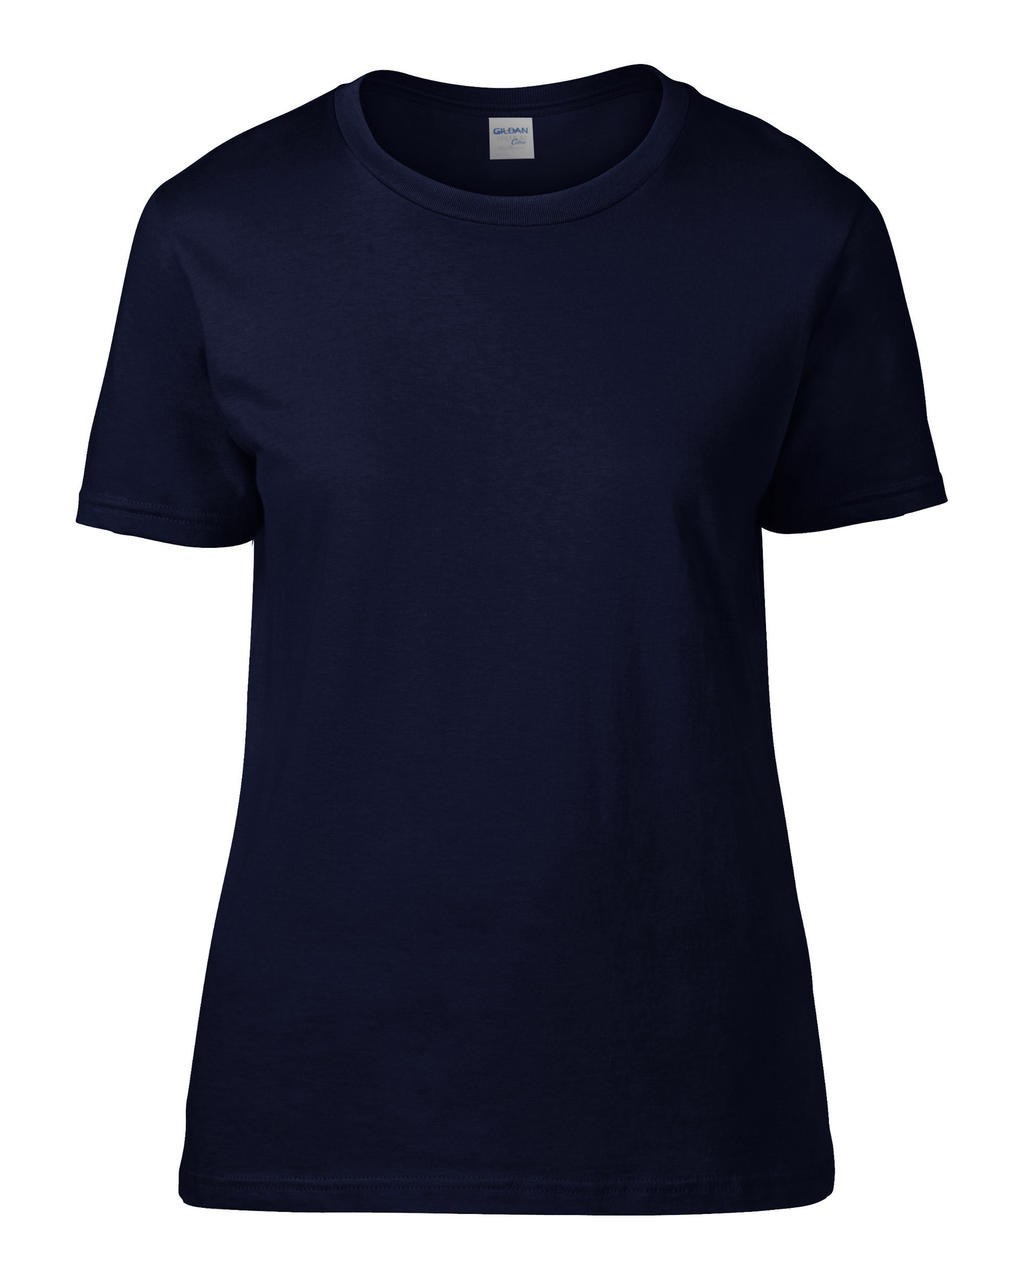 Gildan 5er Pack Premium Cotton Ladies' T-Shirt 4100L